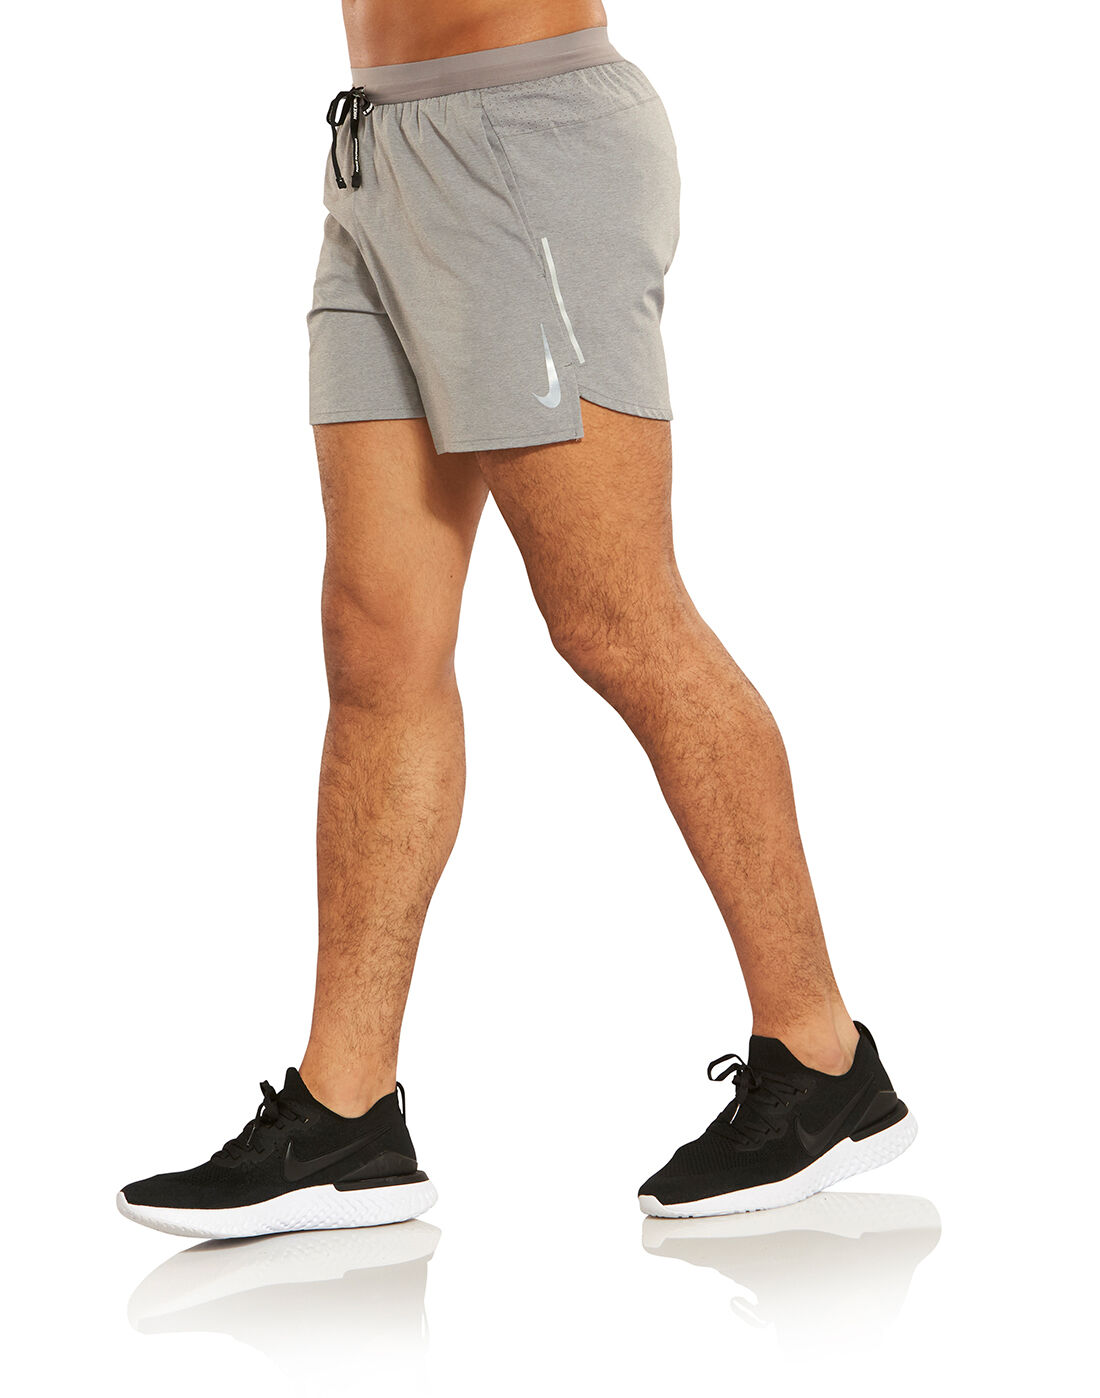 Grey Nike Flex 5 Inch Running Shorts 